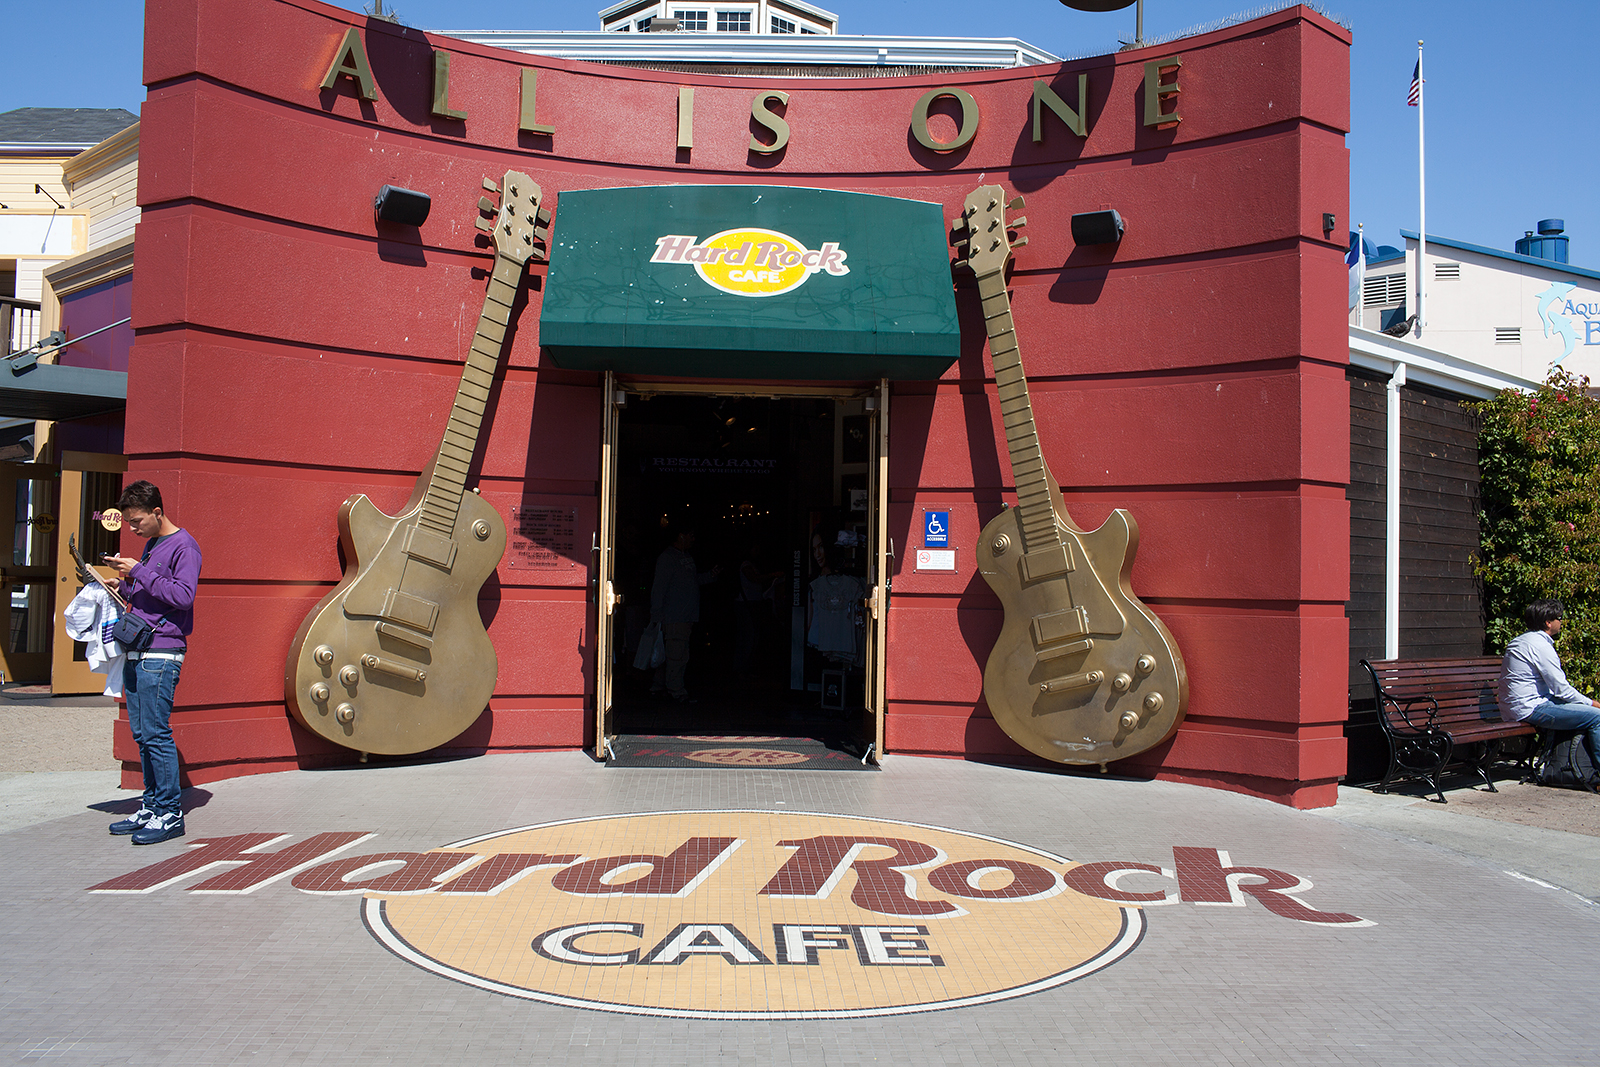 hard rock cafe casino nj